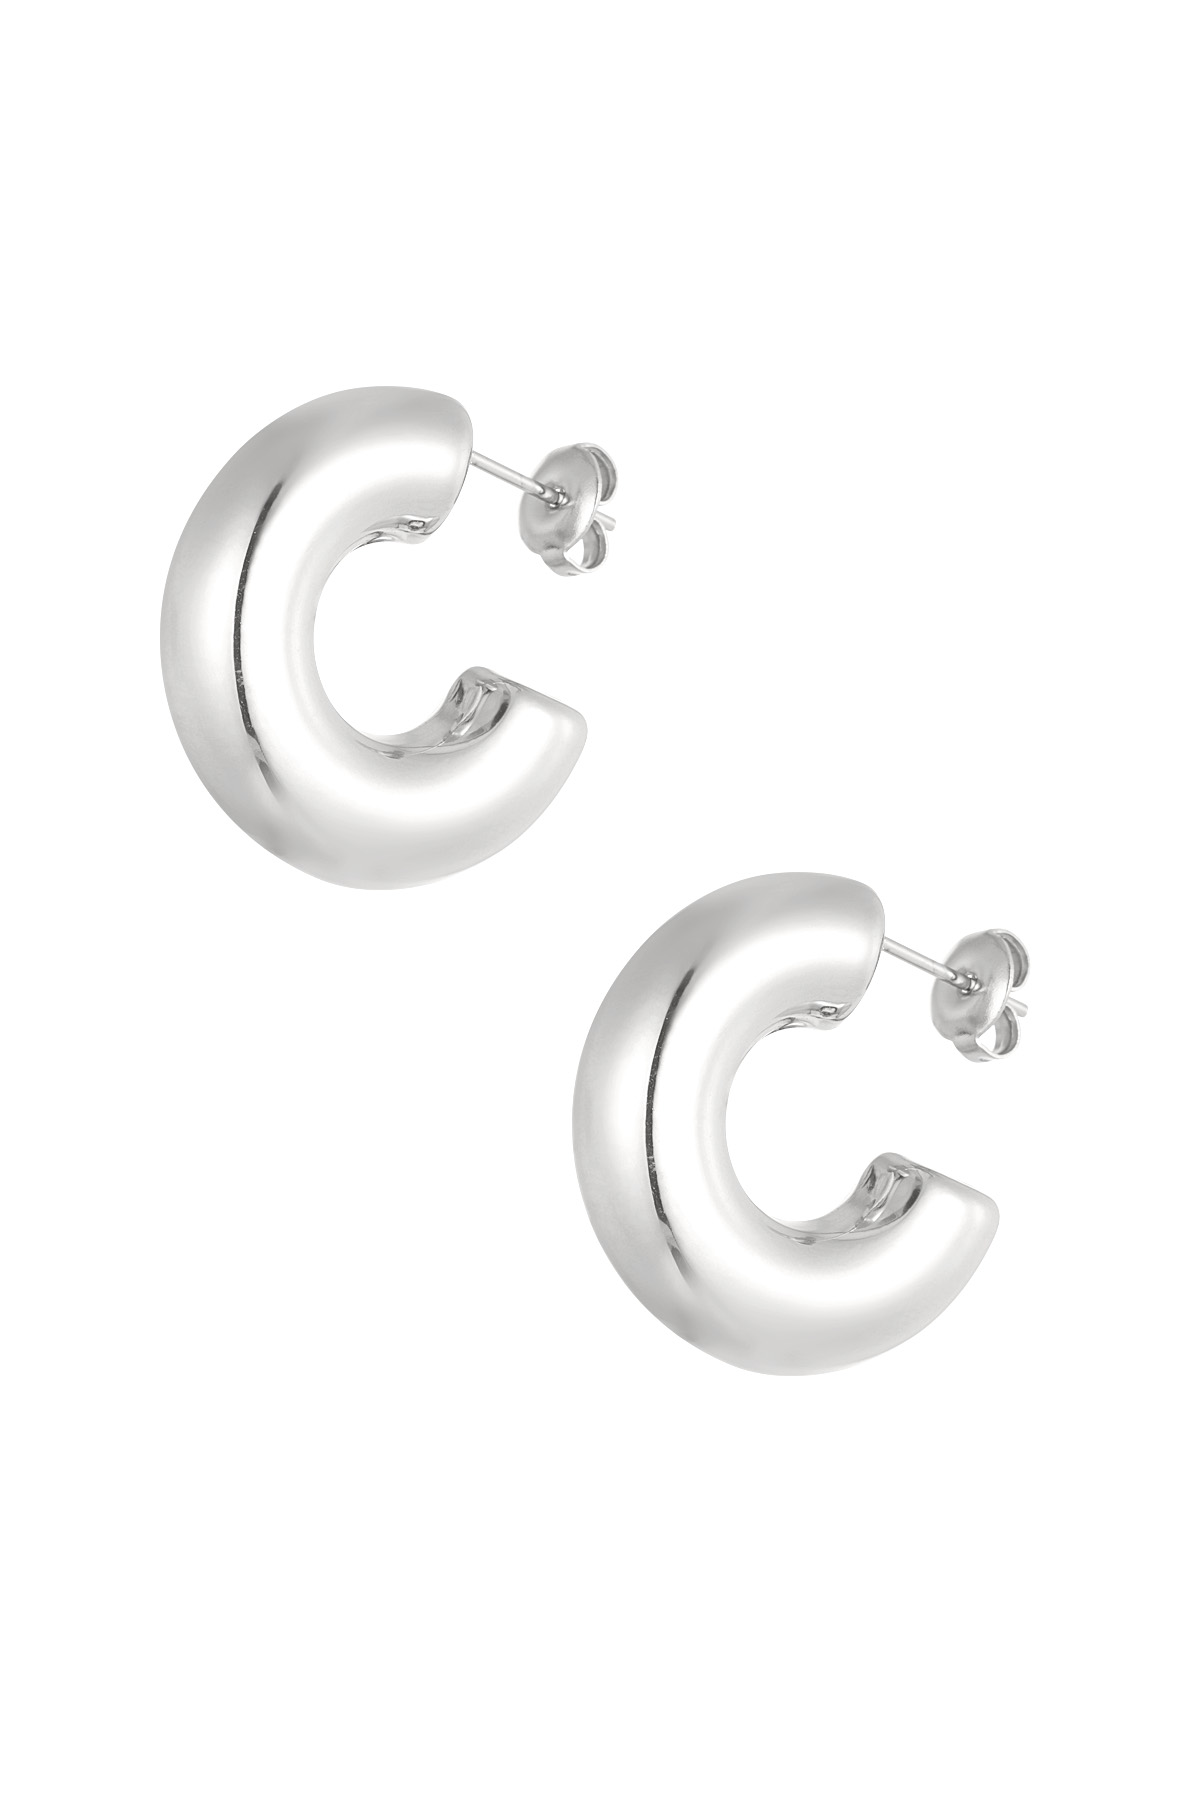 Earrings aesthetic basic half moon - silver h5 